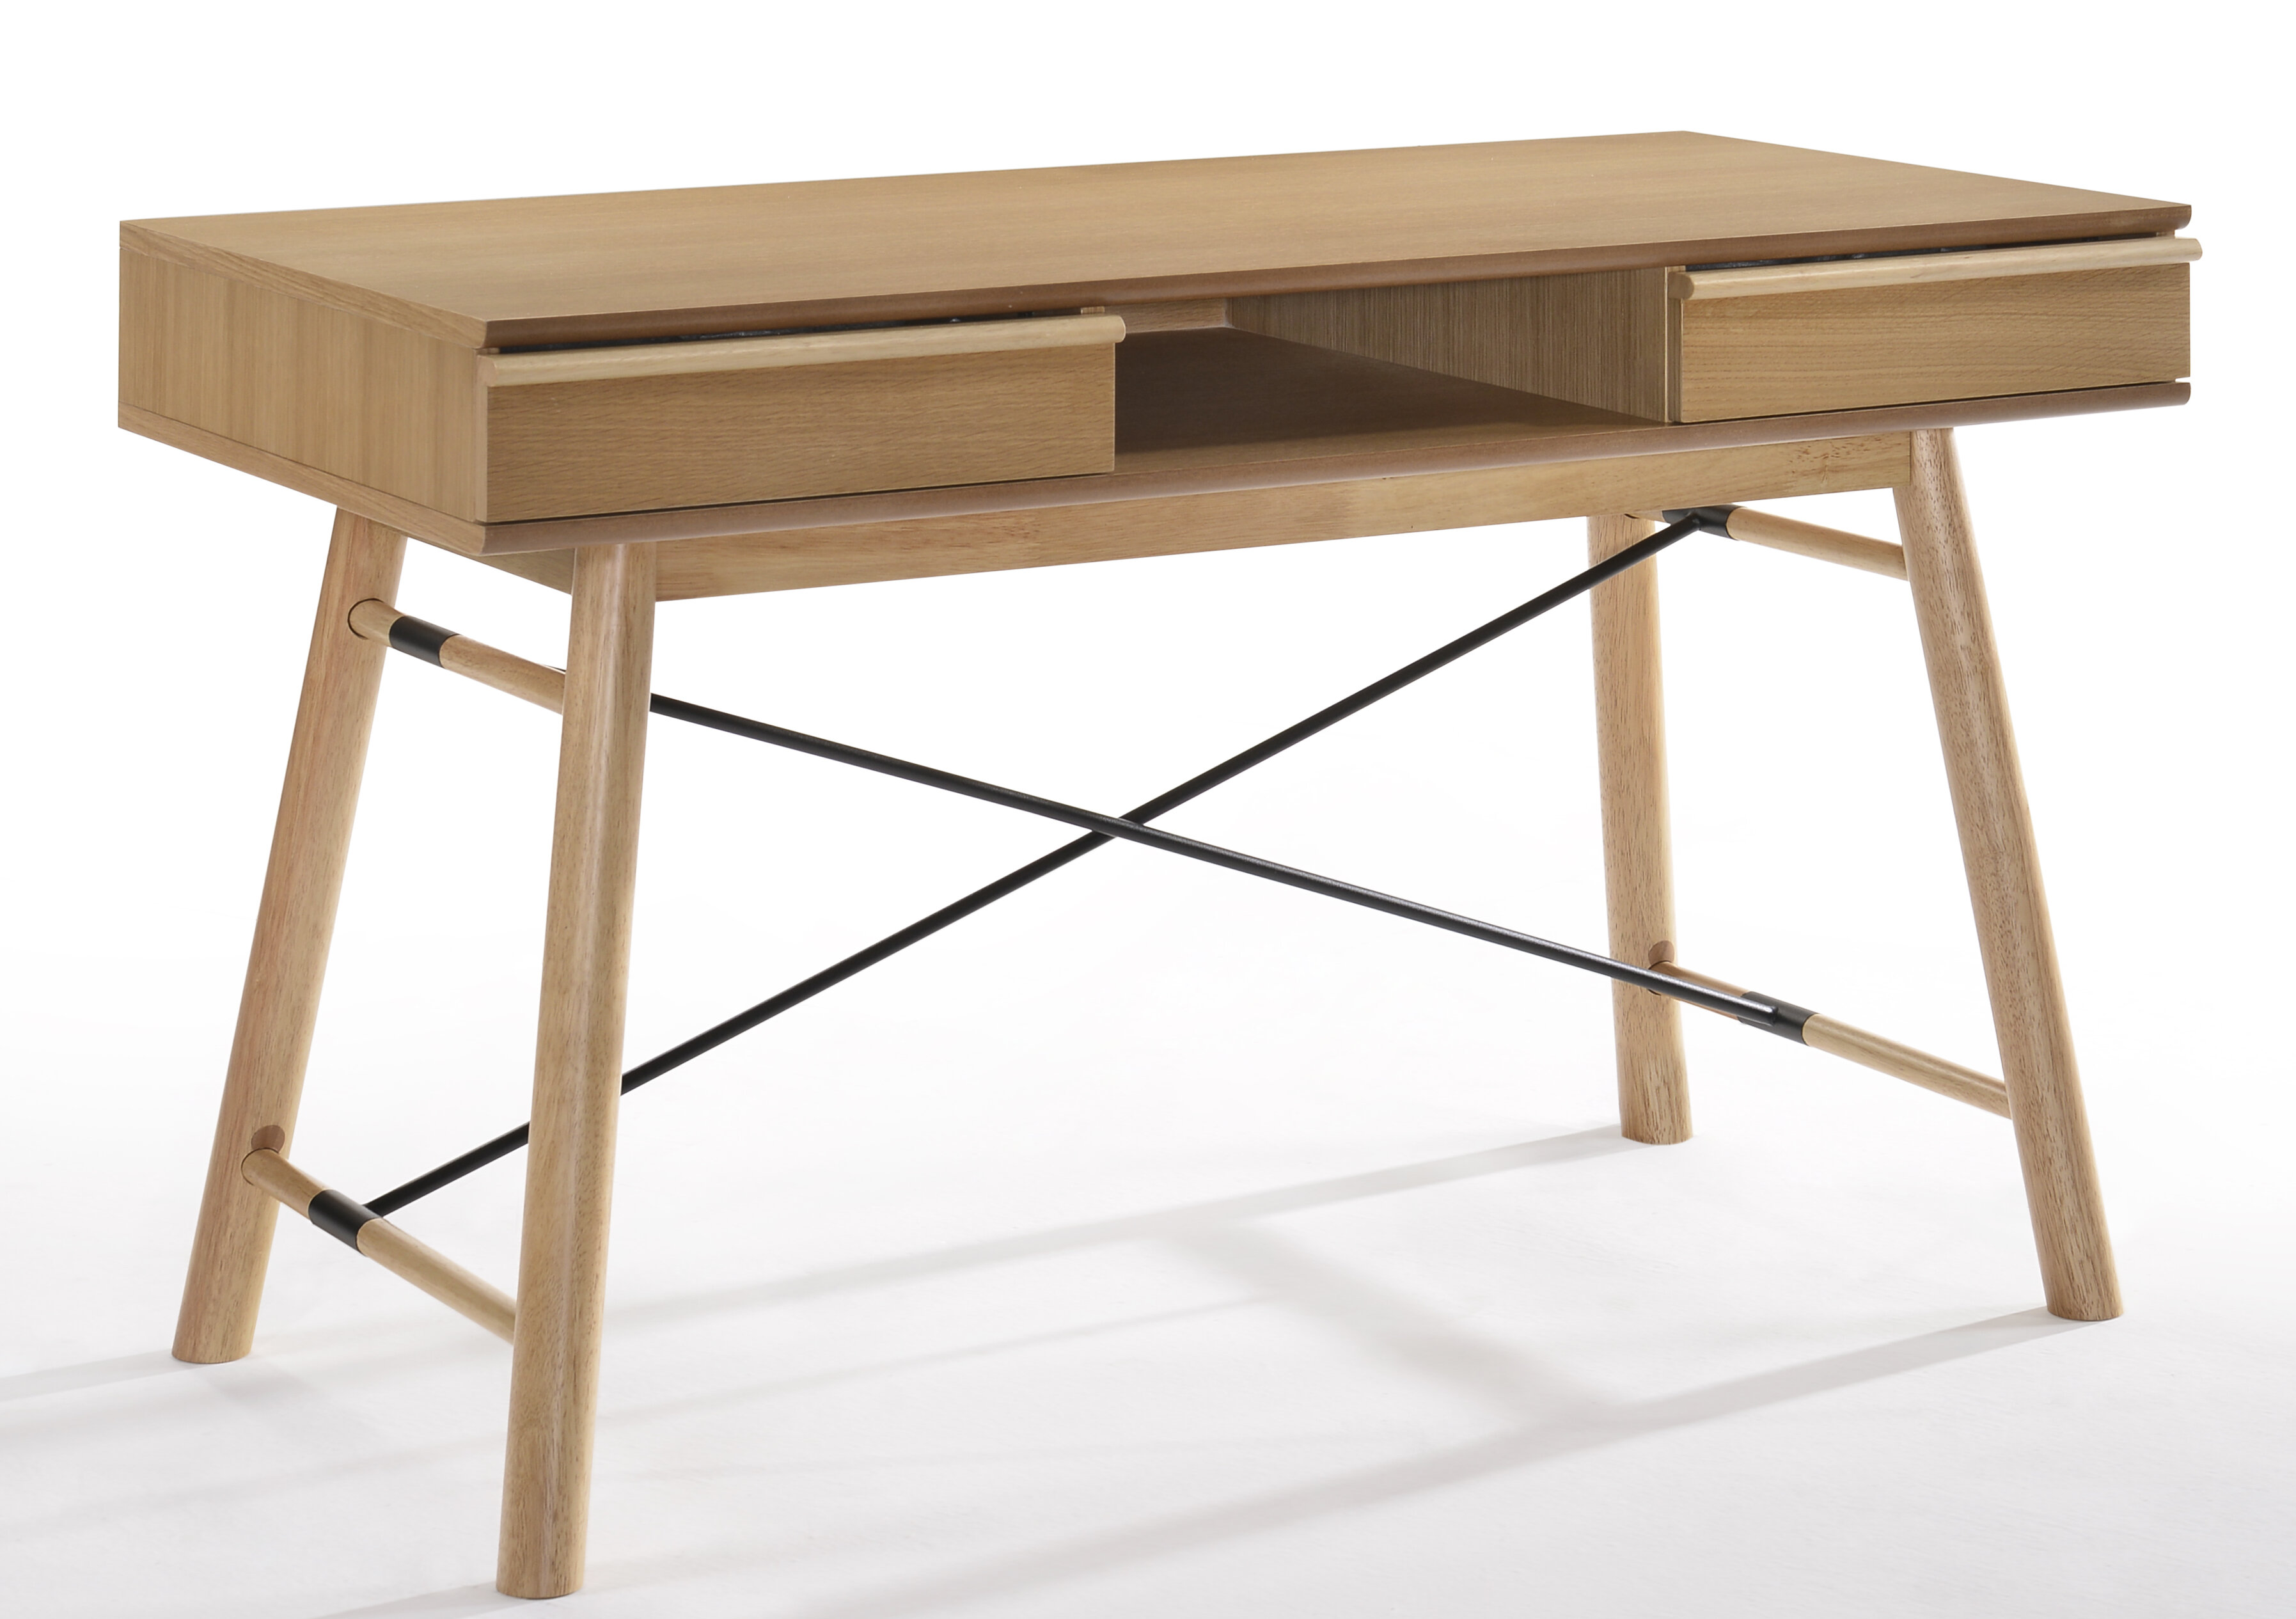 Desks Home Office Furniture Furniture Connect It Desk Build In